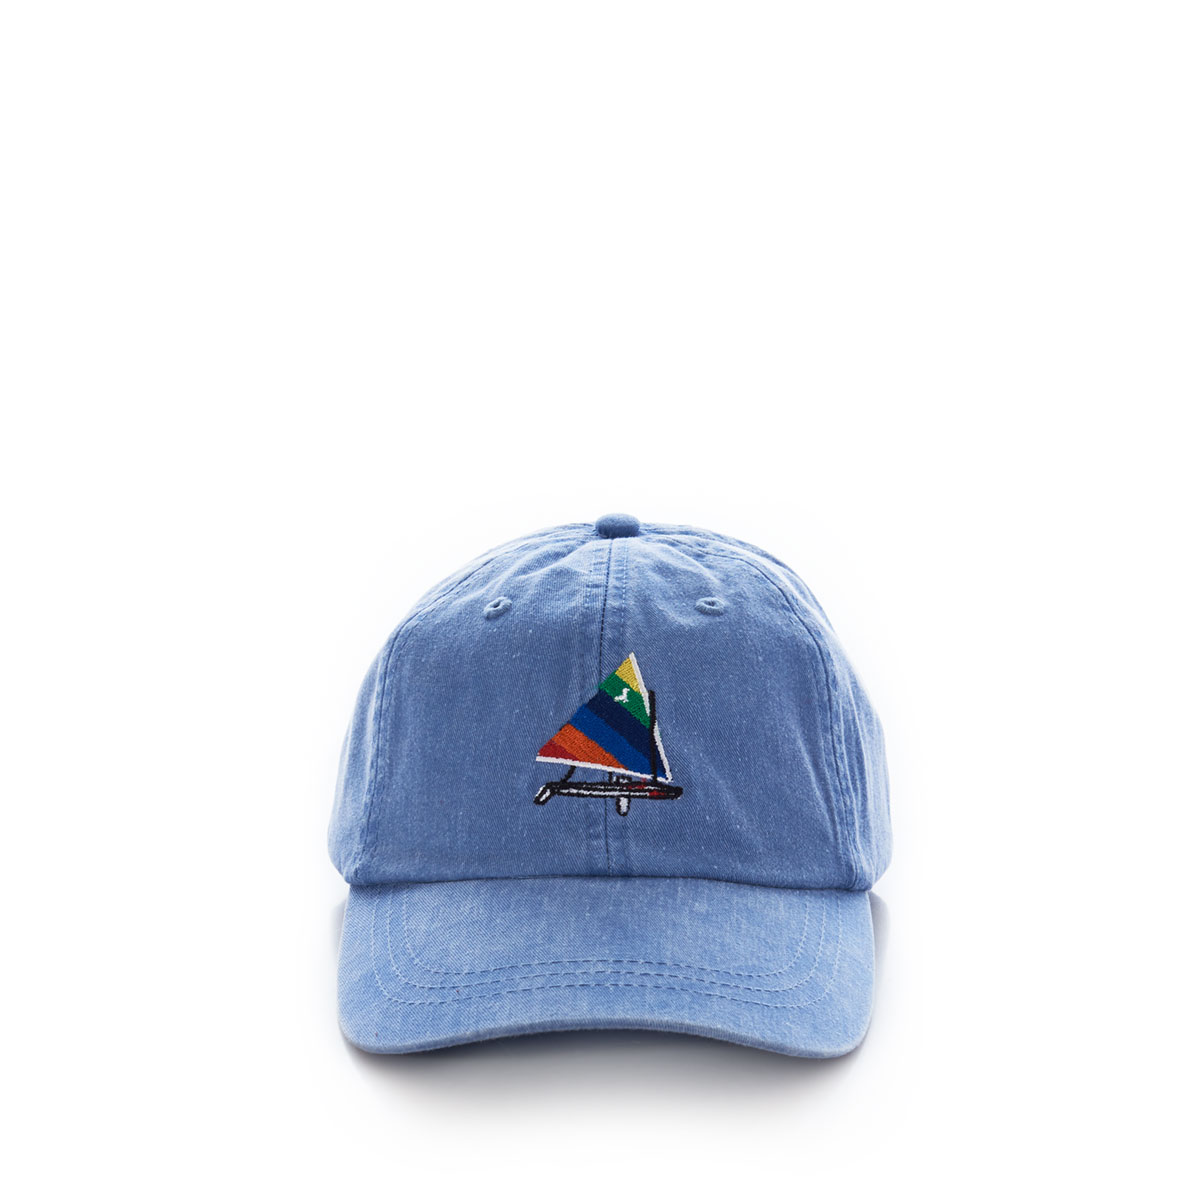 Yabá Sailing Hat (All Blue)